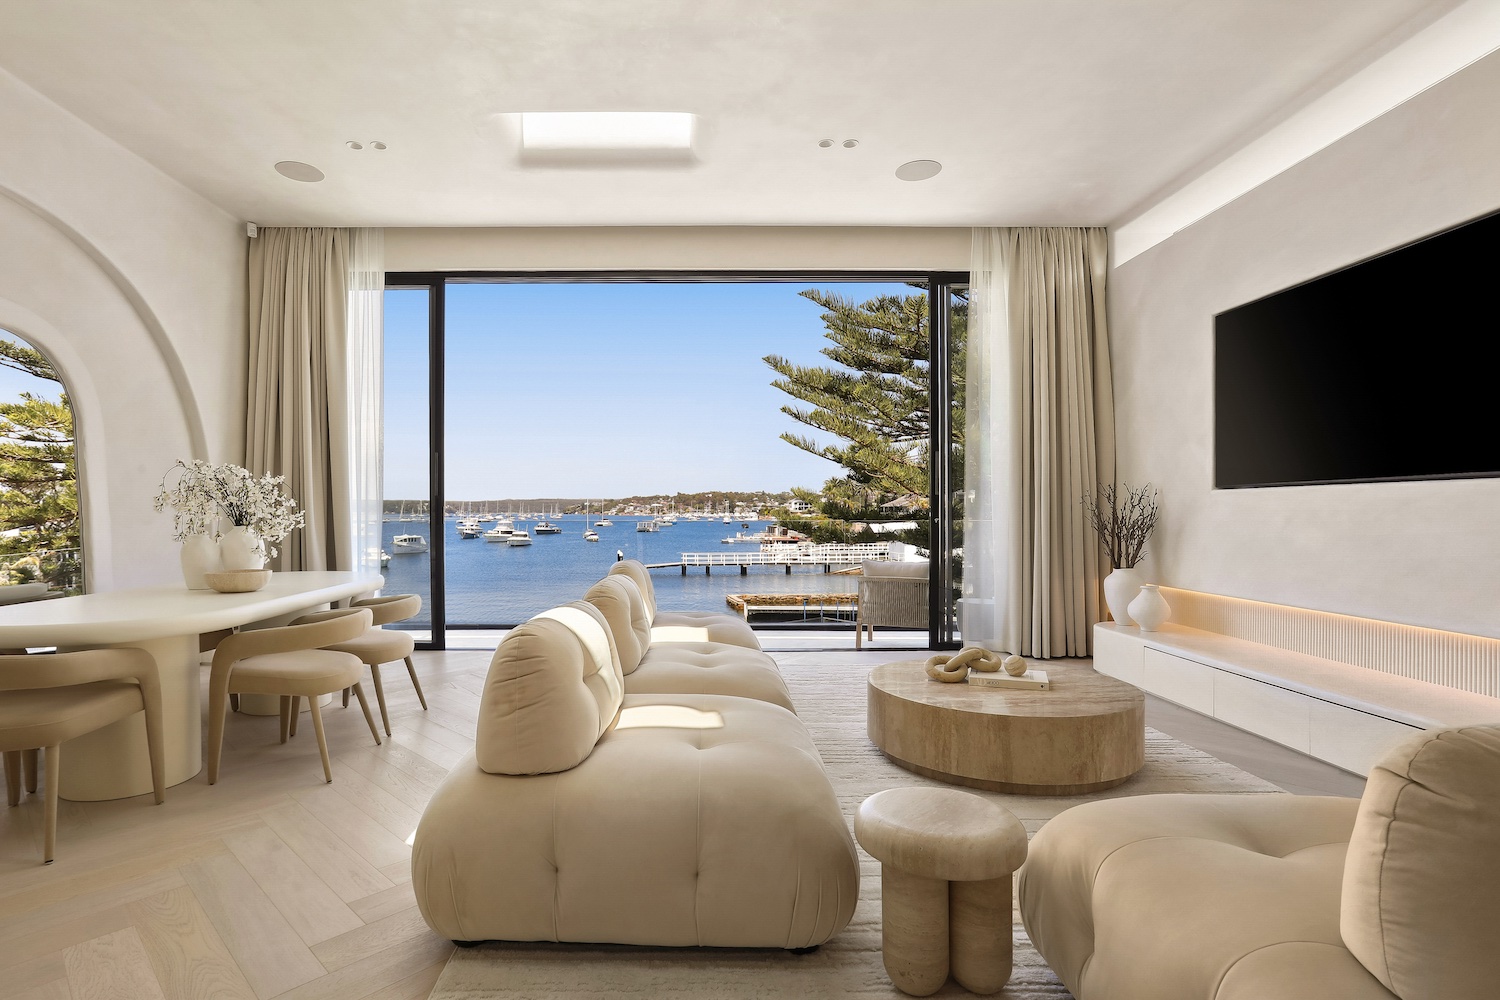 Luxury Mediterranean oasis in Cronulla: $10 million designer residence unveiled